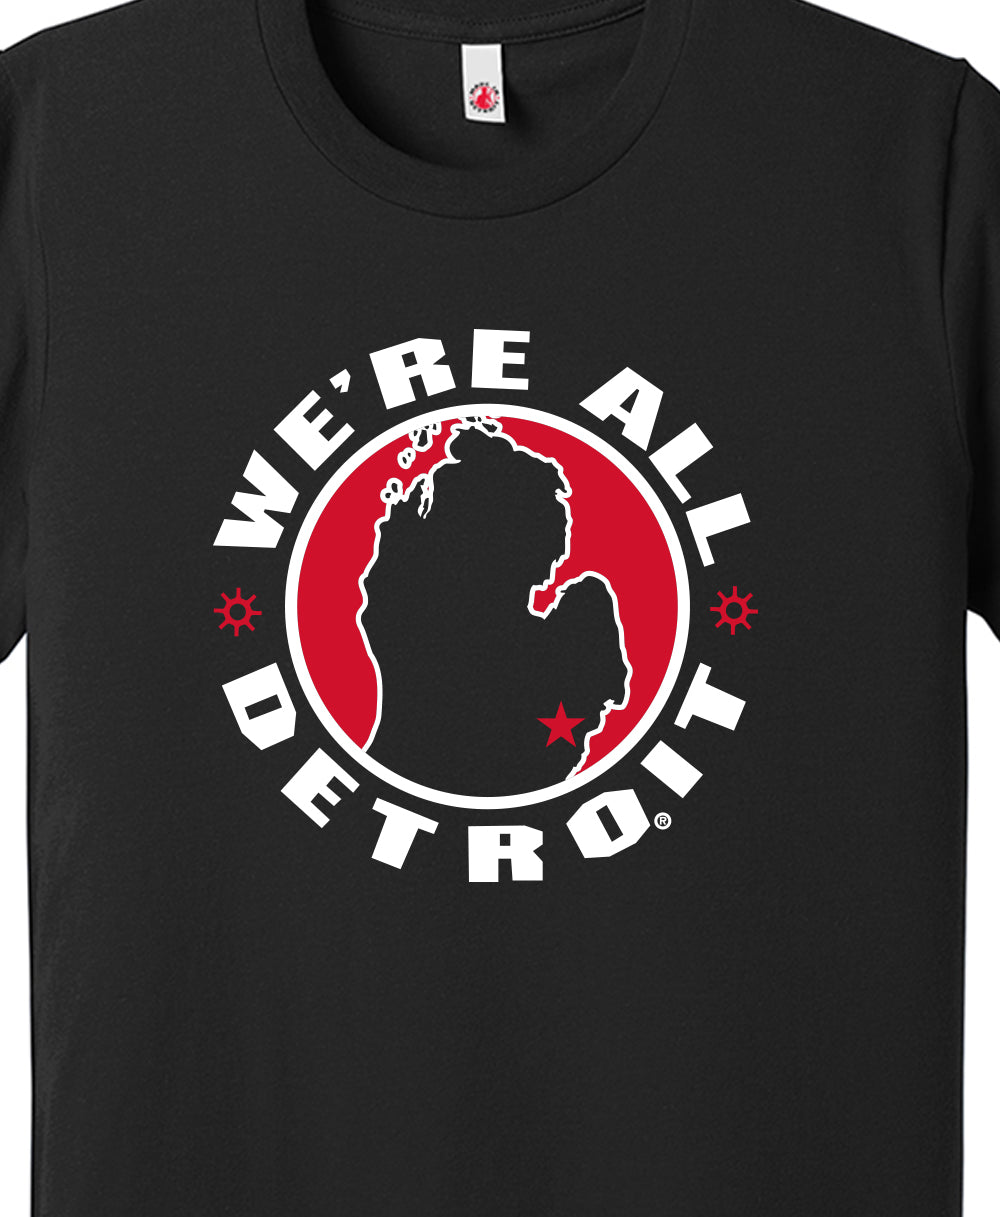 We're All Detroit Men's Black